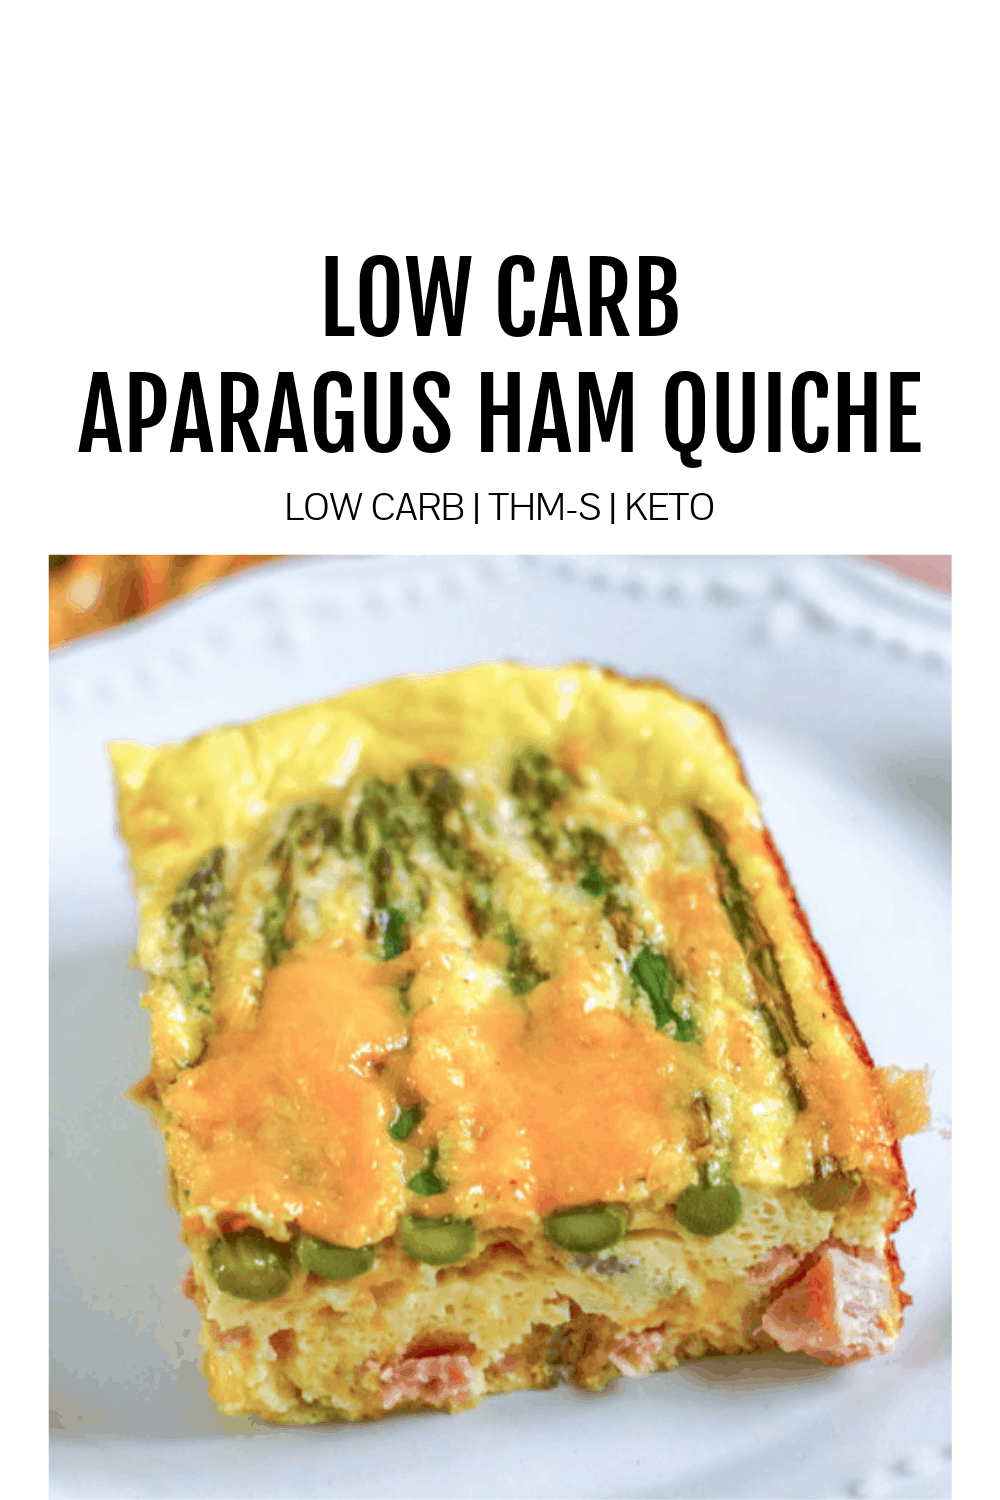 Featured Image for Low Carb Asparagus Ham Quiche